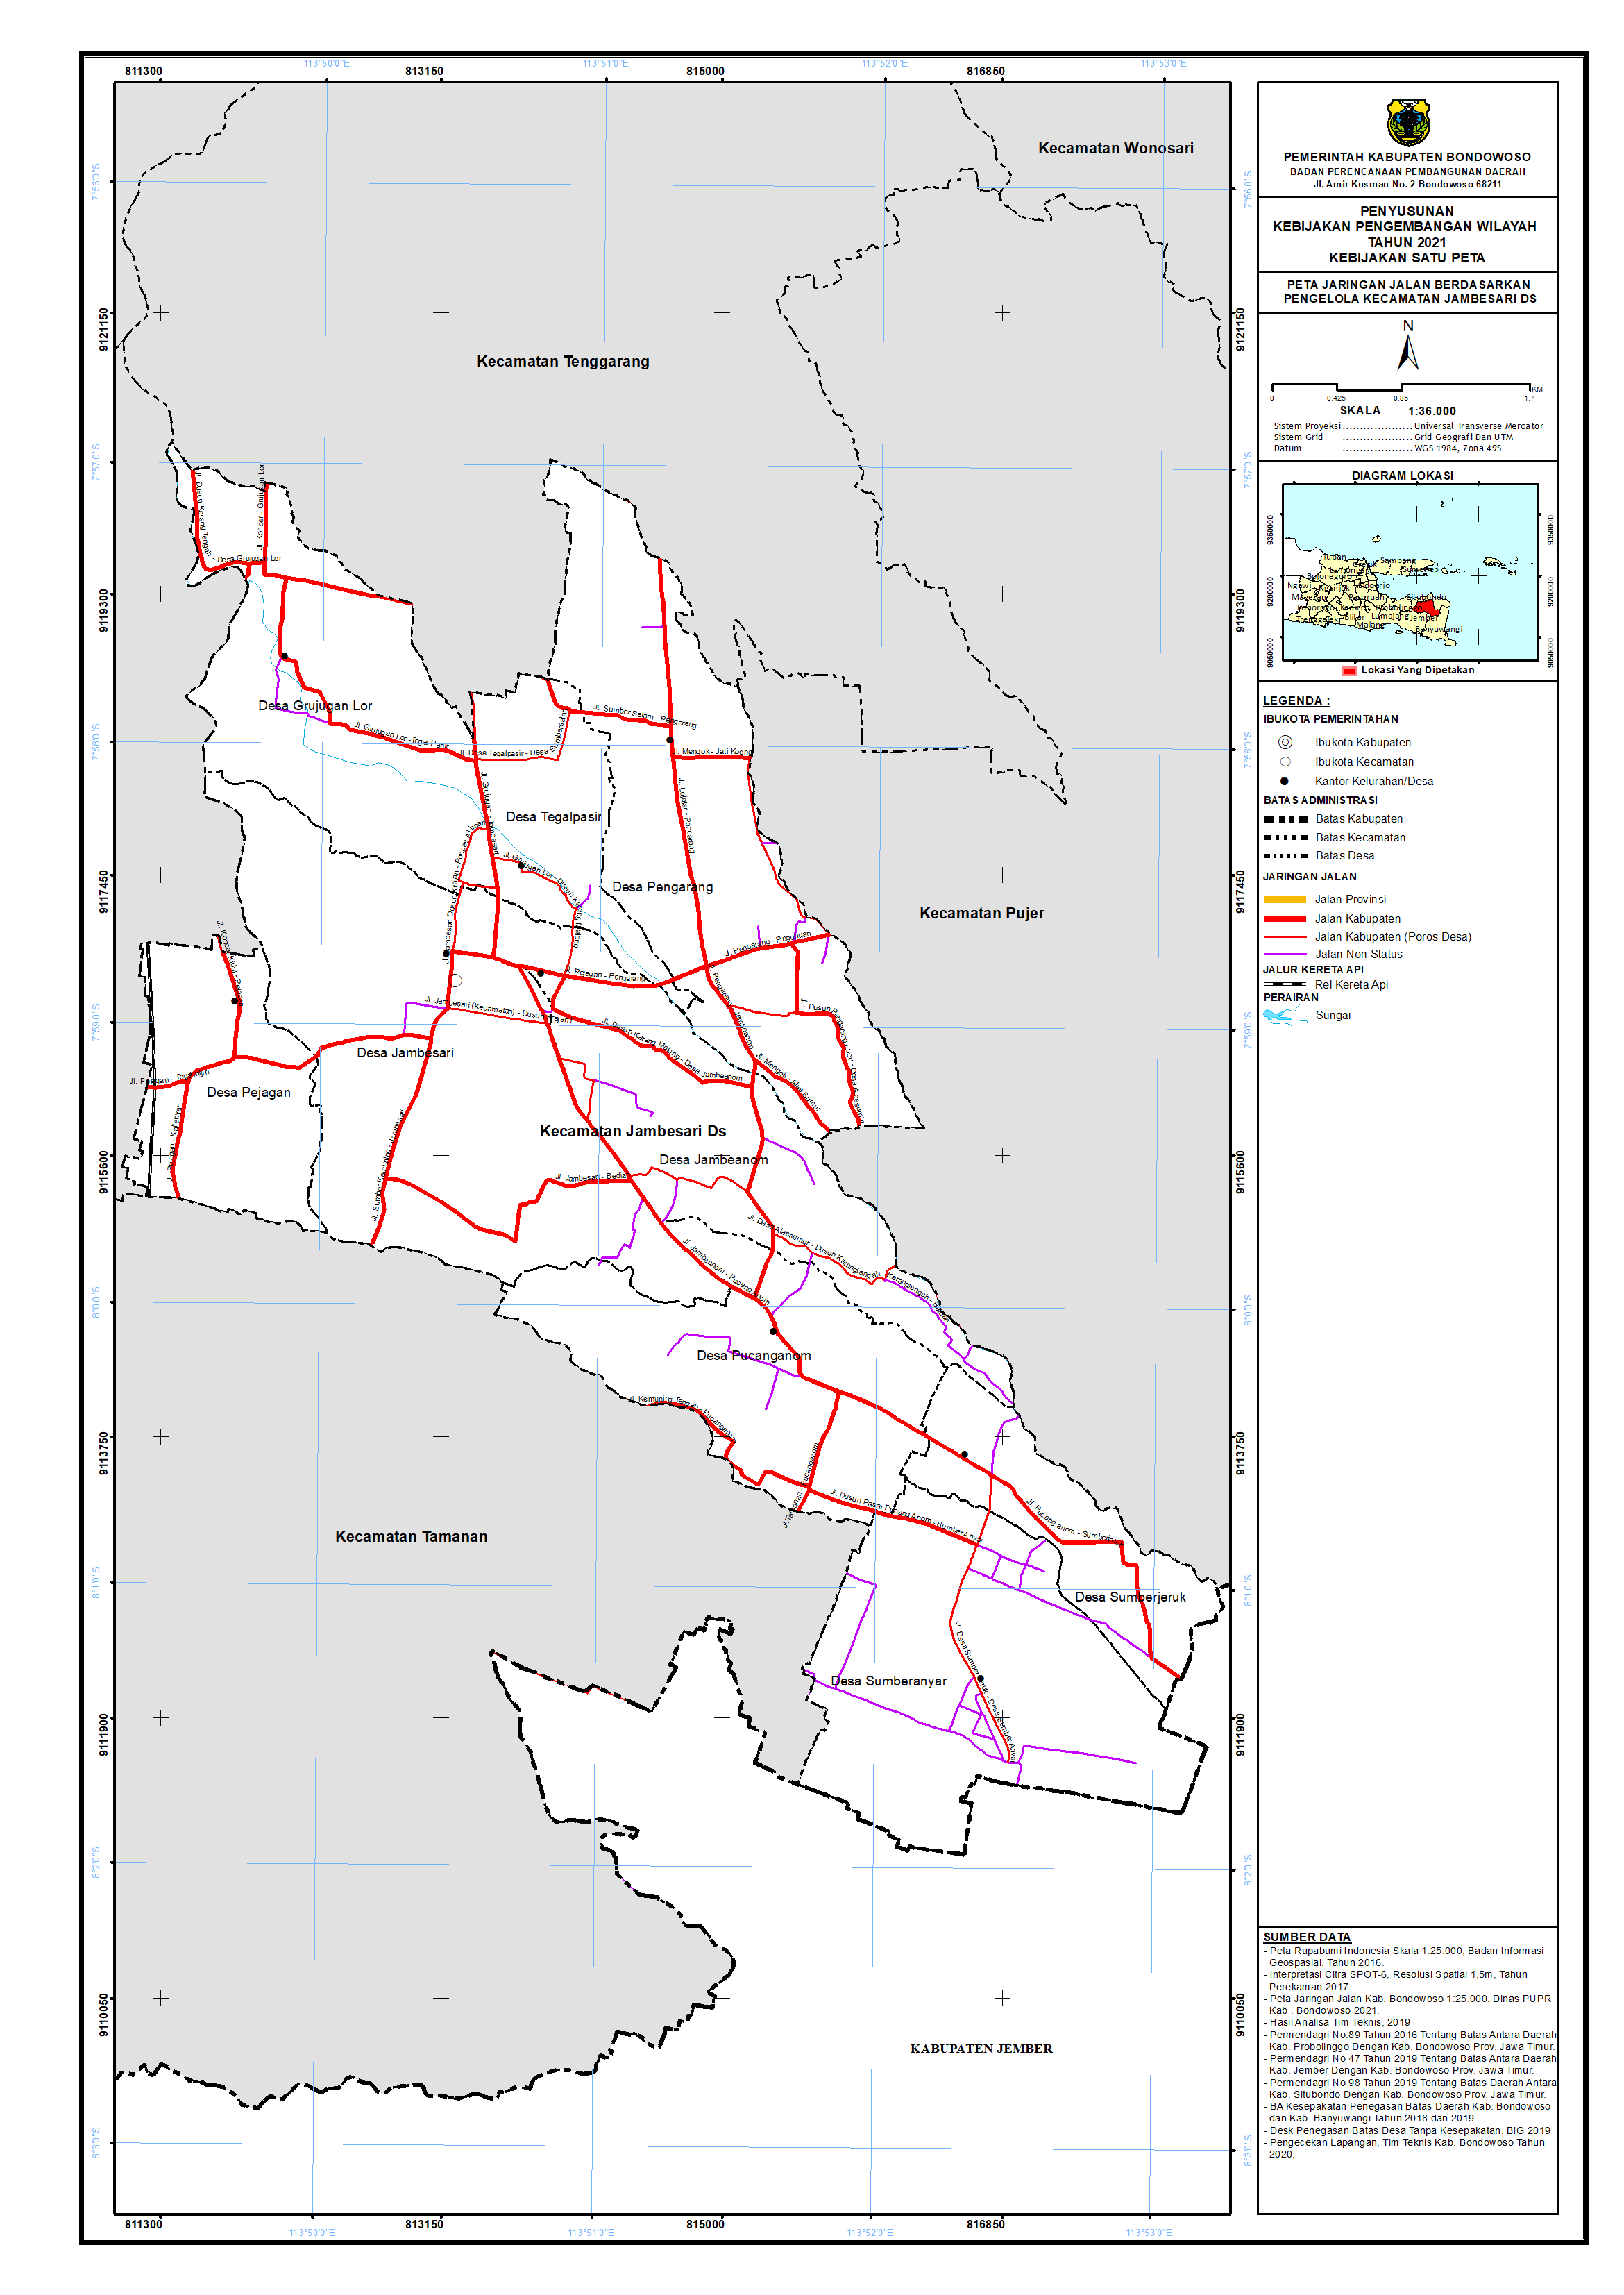 Peta Jaringan Jalan Berdasarkan Pengelola Kecamatan Jambesari DS.png